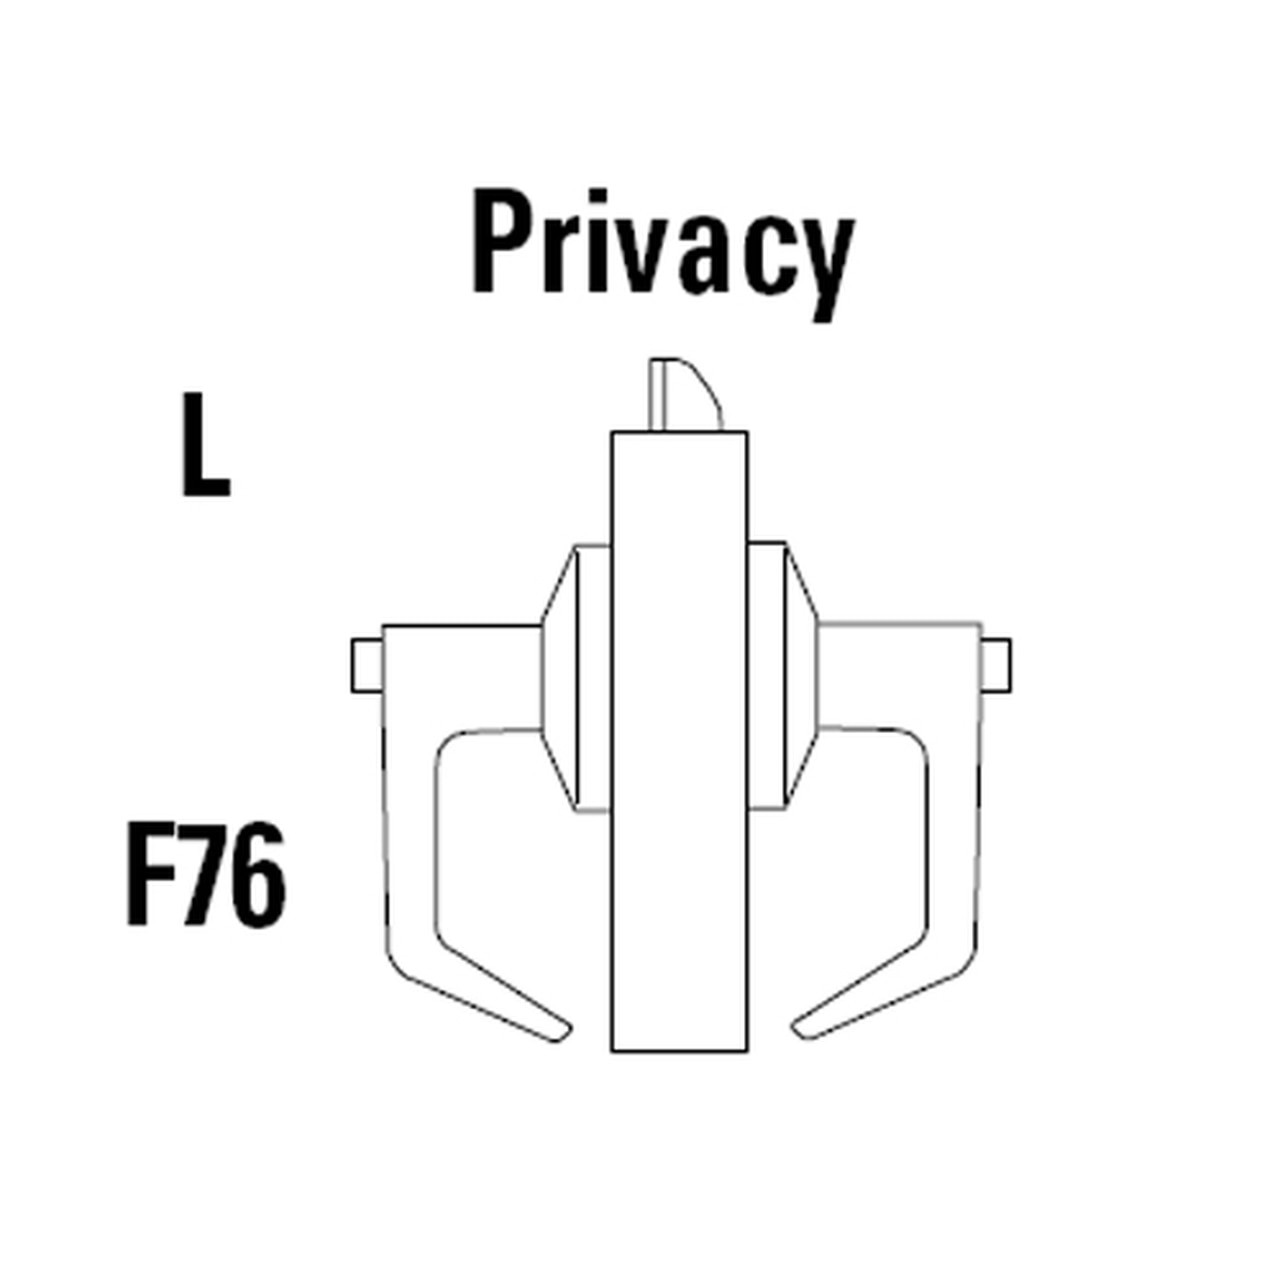 9K30L14CS3622 Best 9K Series Privacy Heavy Duty Cylindrical Lever Locks in Black